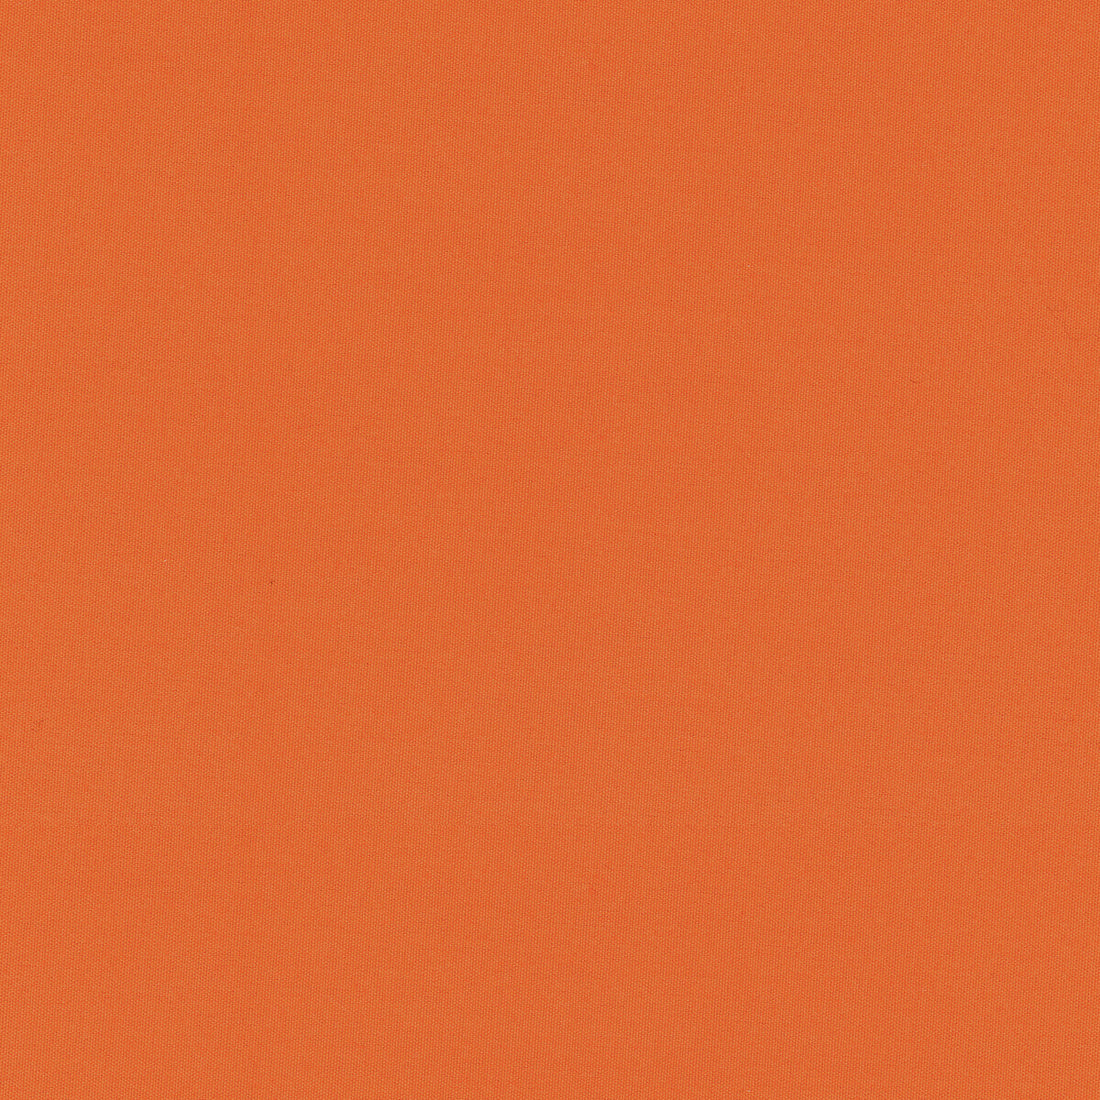 Adrien Cotton fabric in orange color - pattern 8017121.12.0 - by Brunschwig &amp; Fils